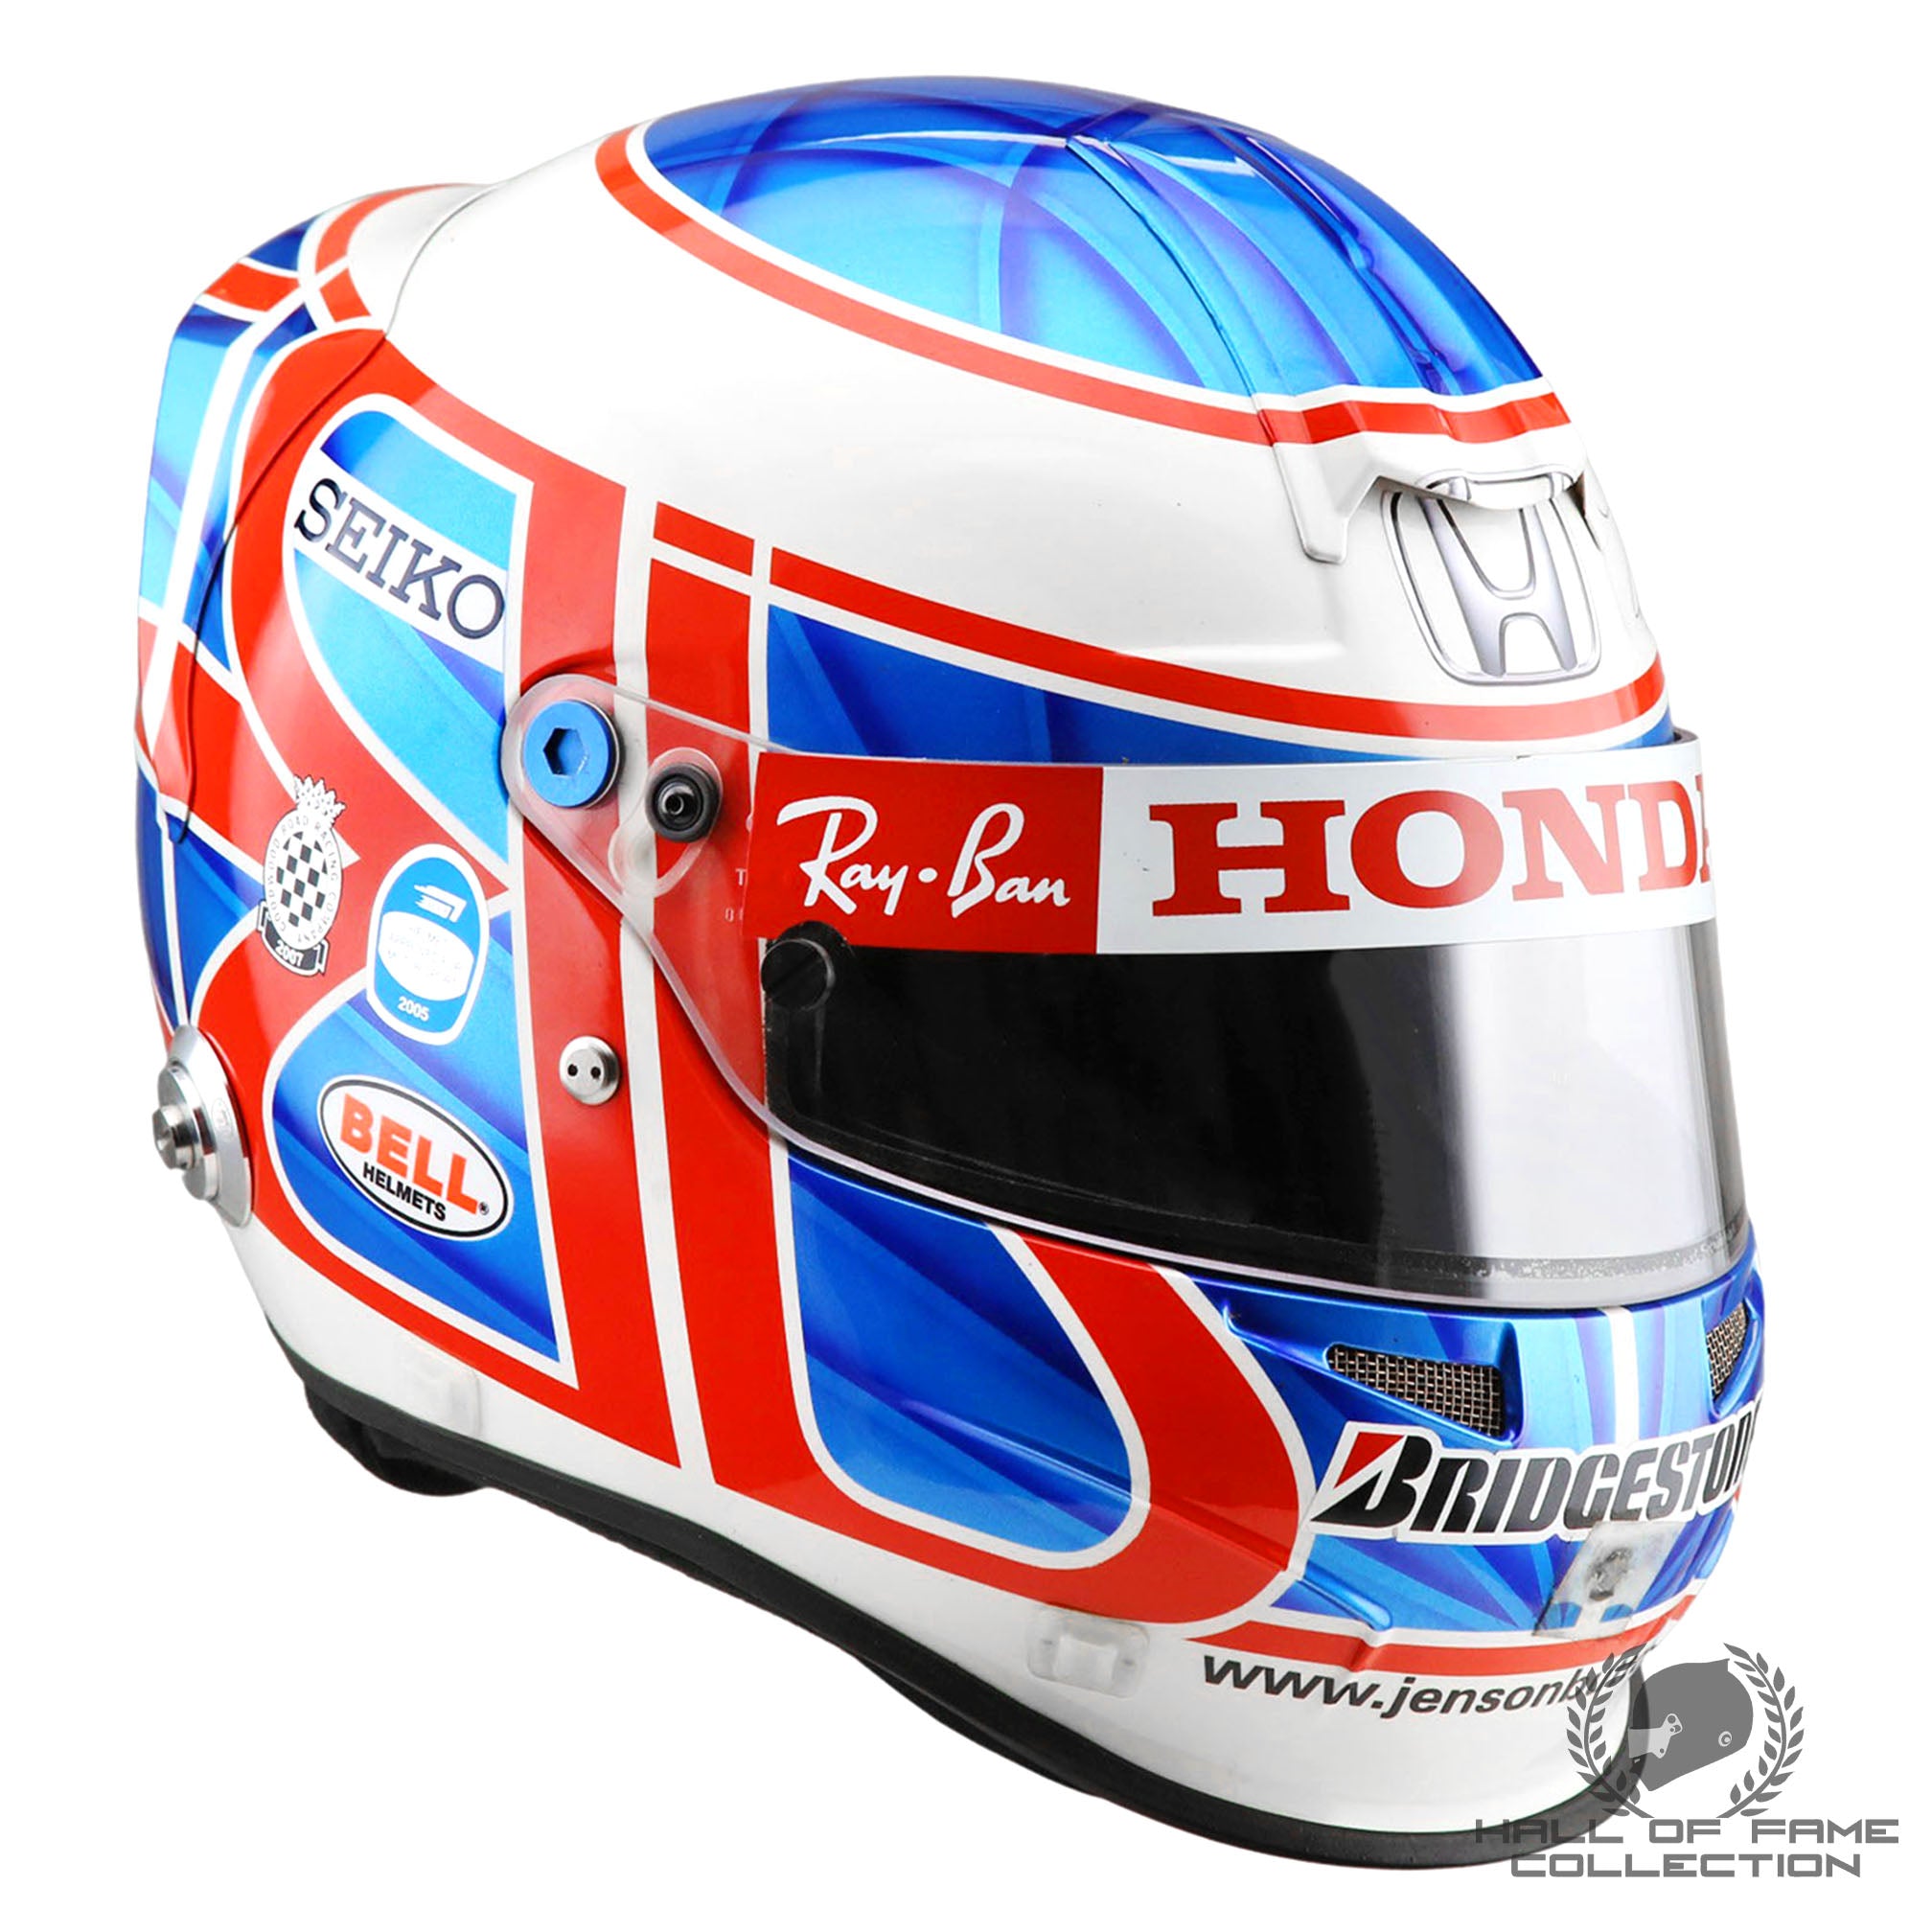 2007 Jenson Button Signed Race Used US Grand Prix Honda F1 Helmet